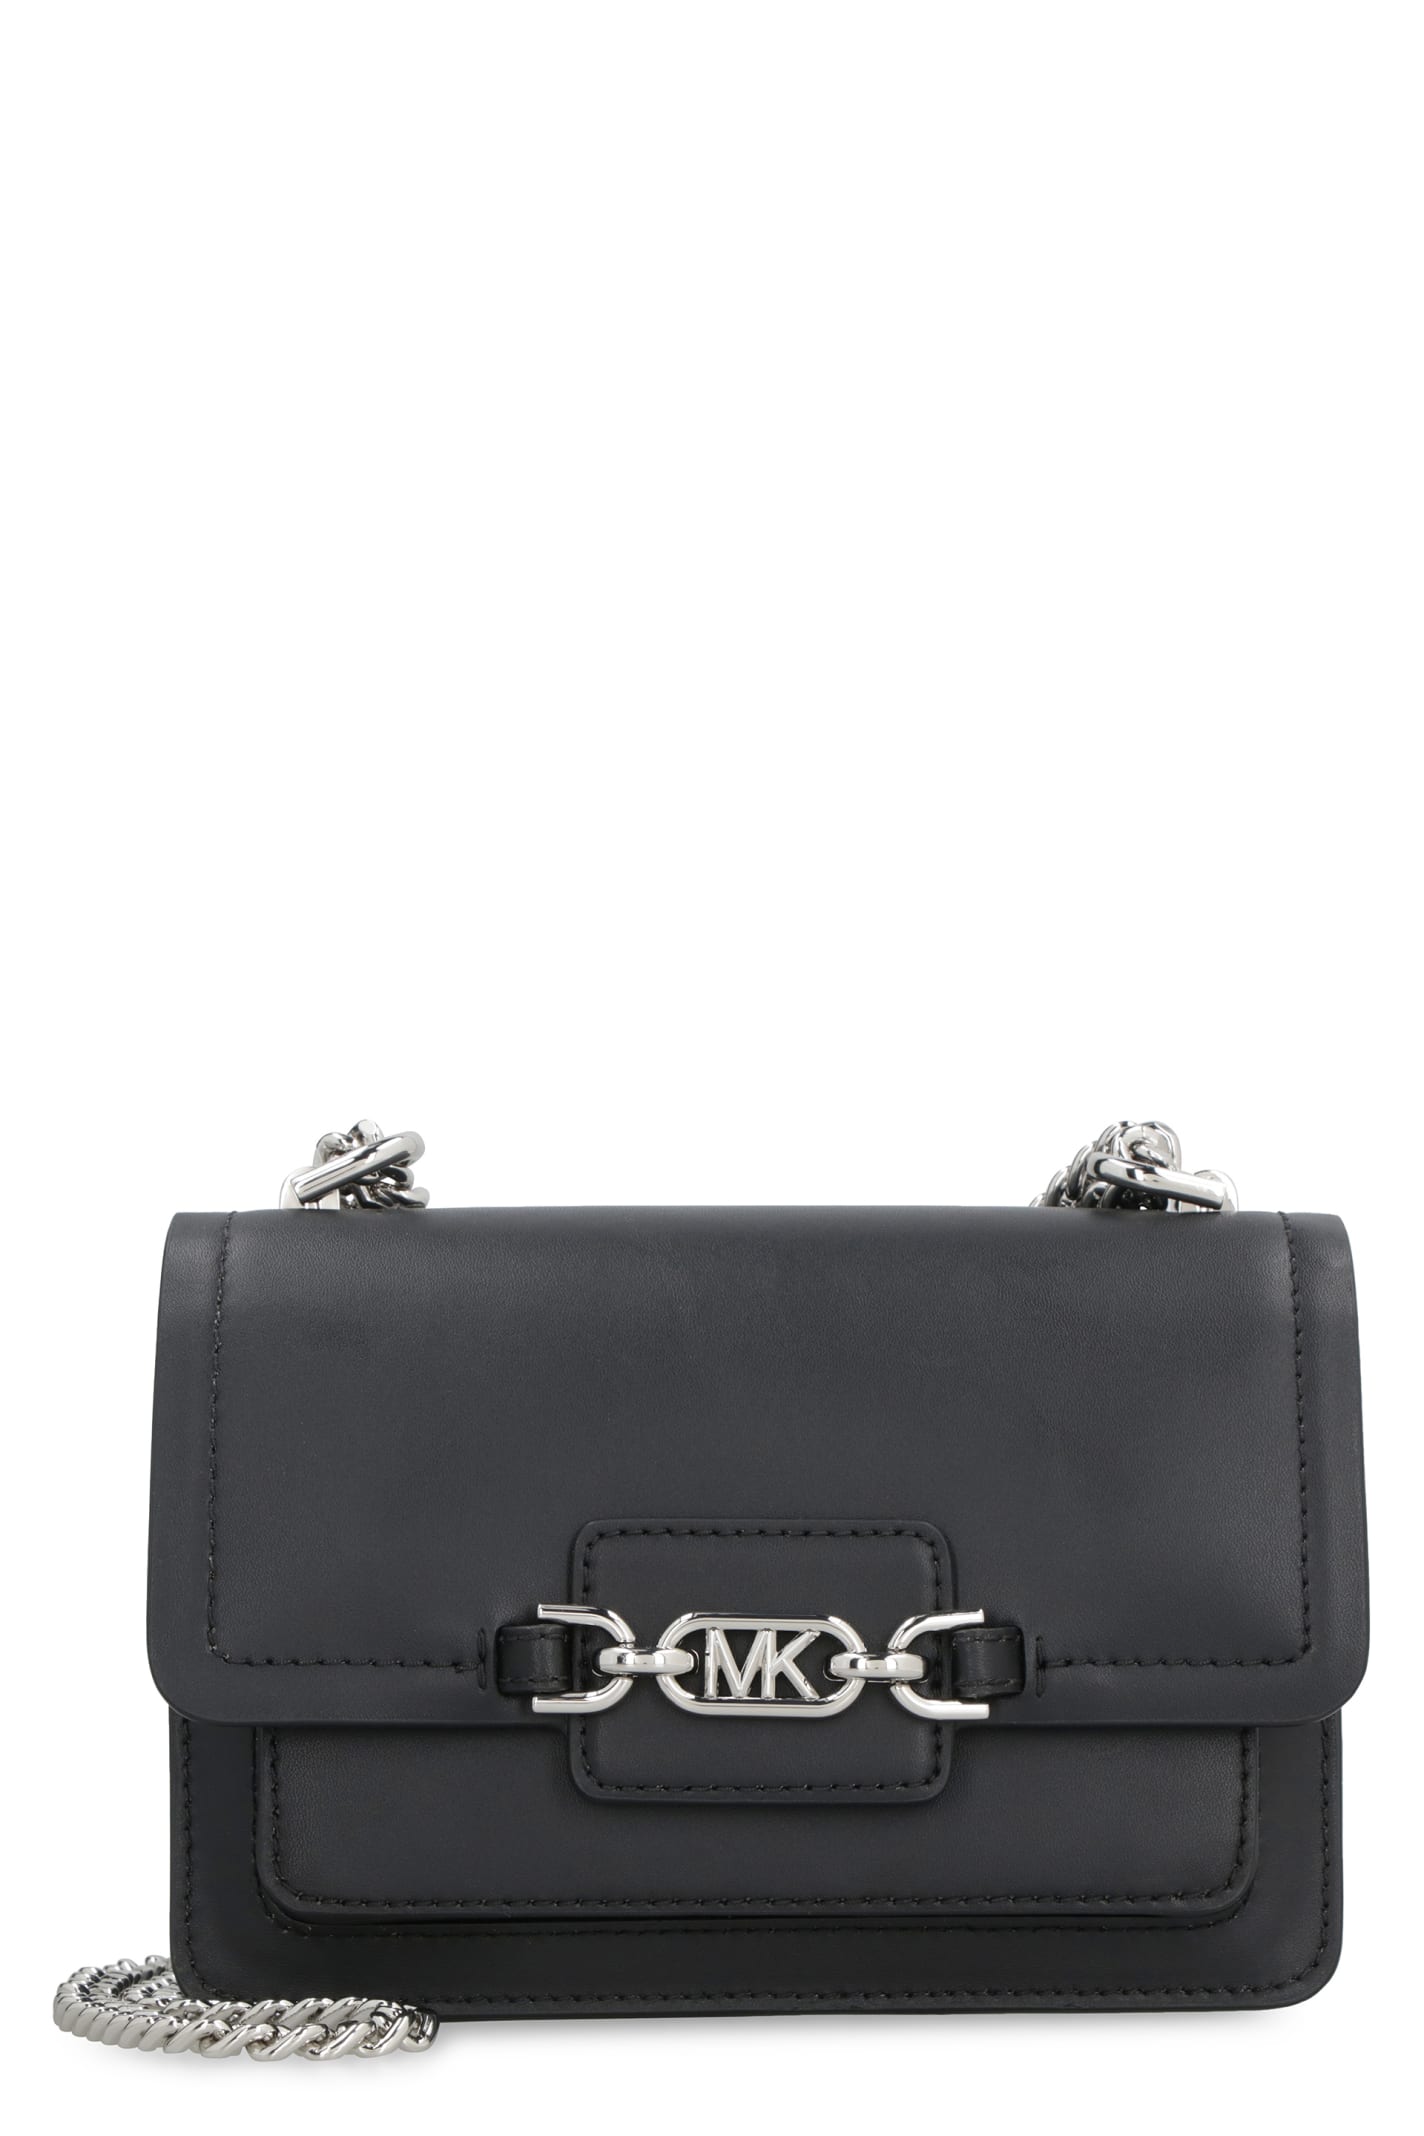 Michael Kors Heather Leather Mini Crossbody Bag